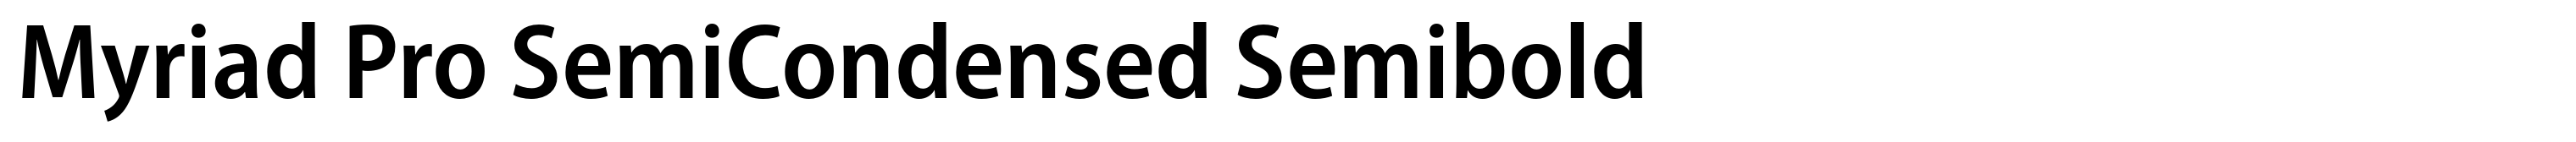 Myriad Pro SemiCondensed Semibold